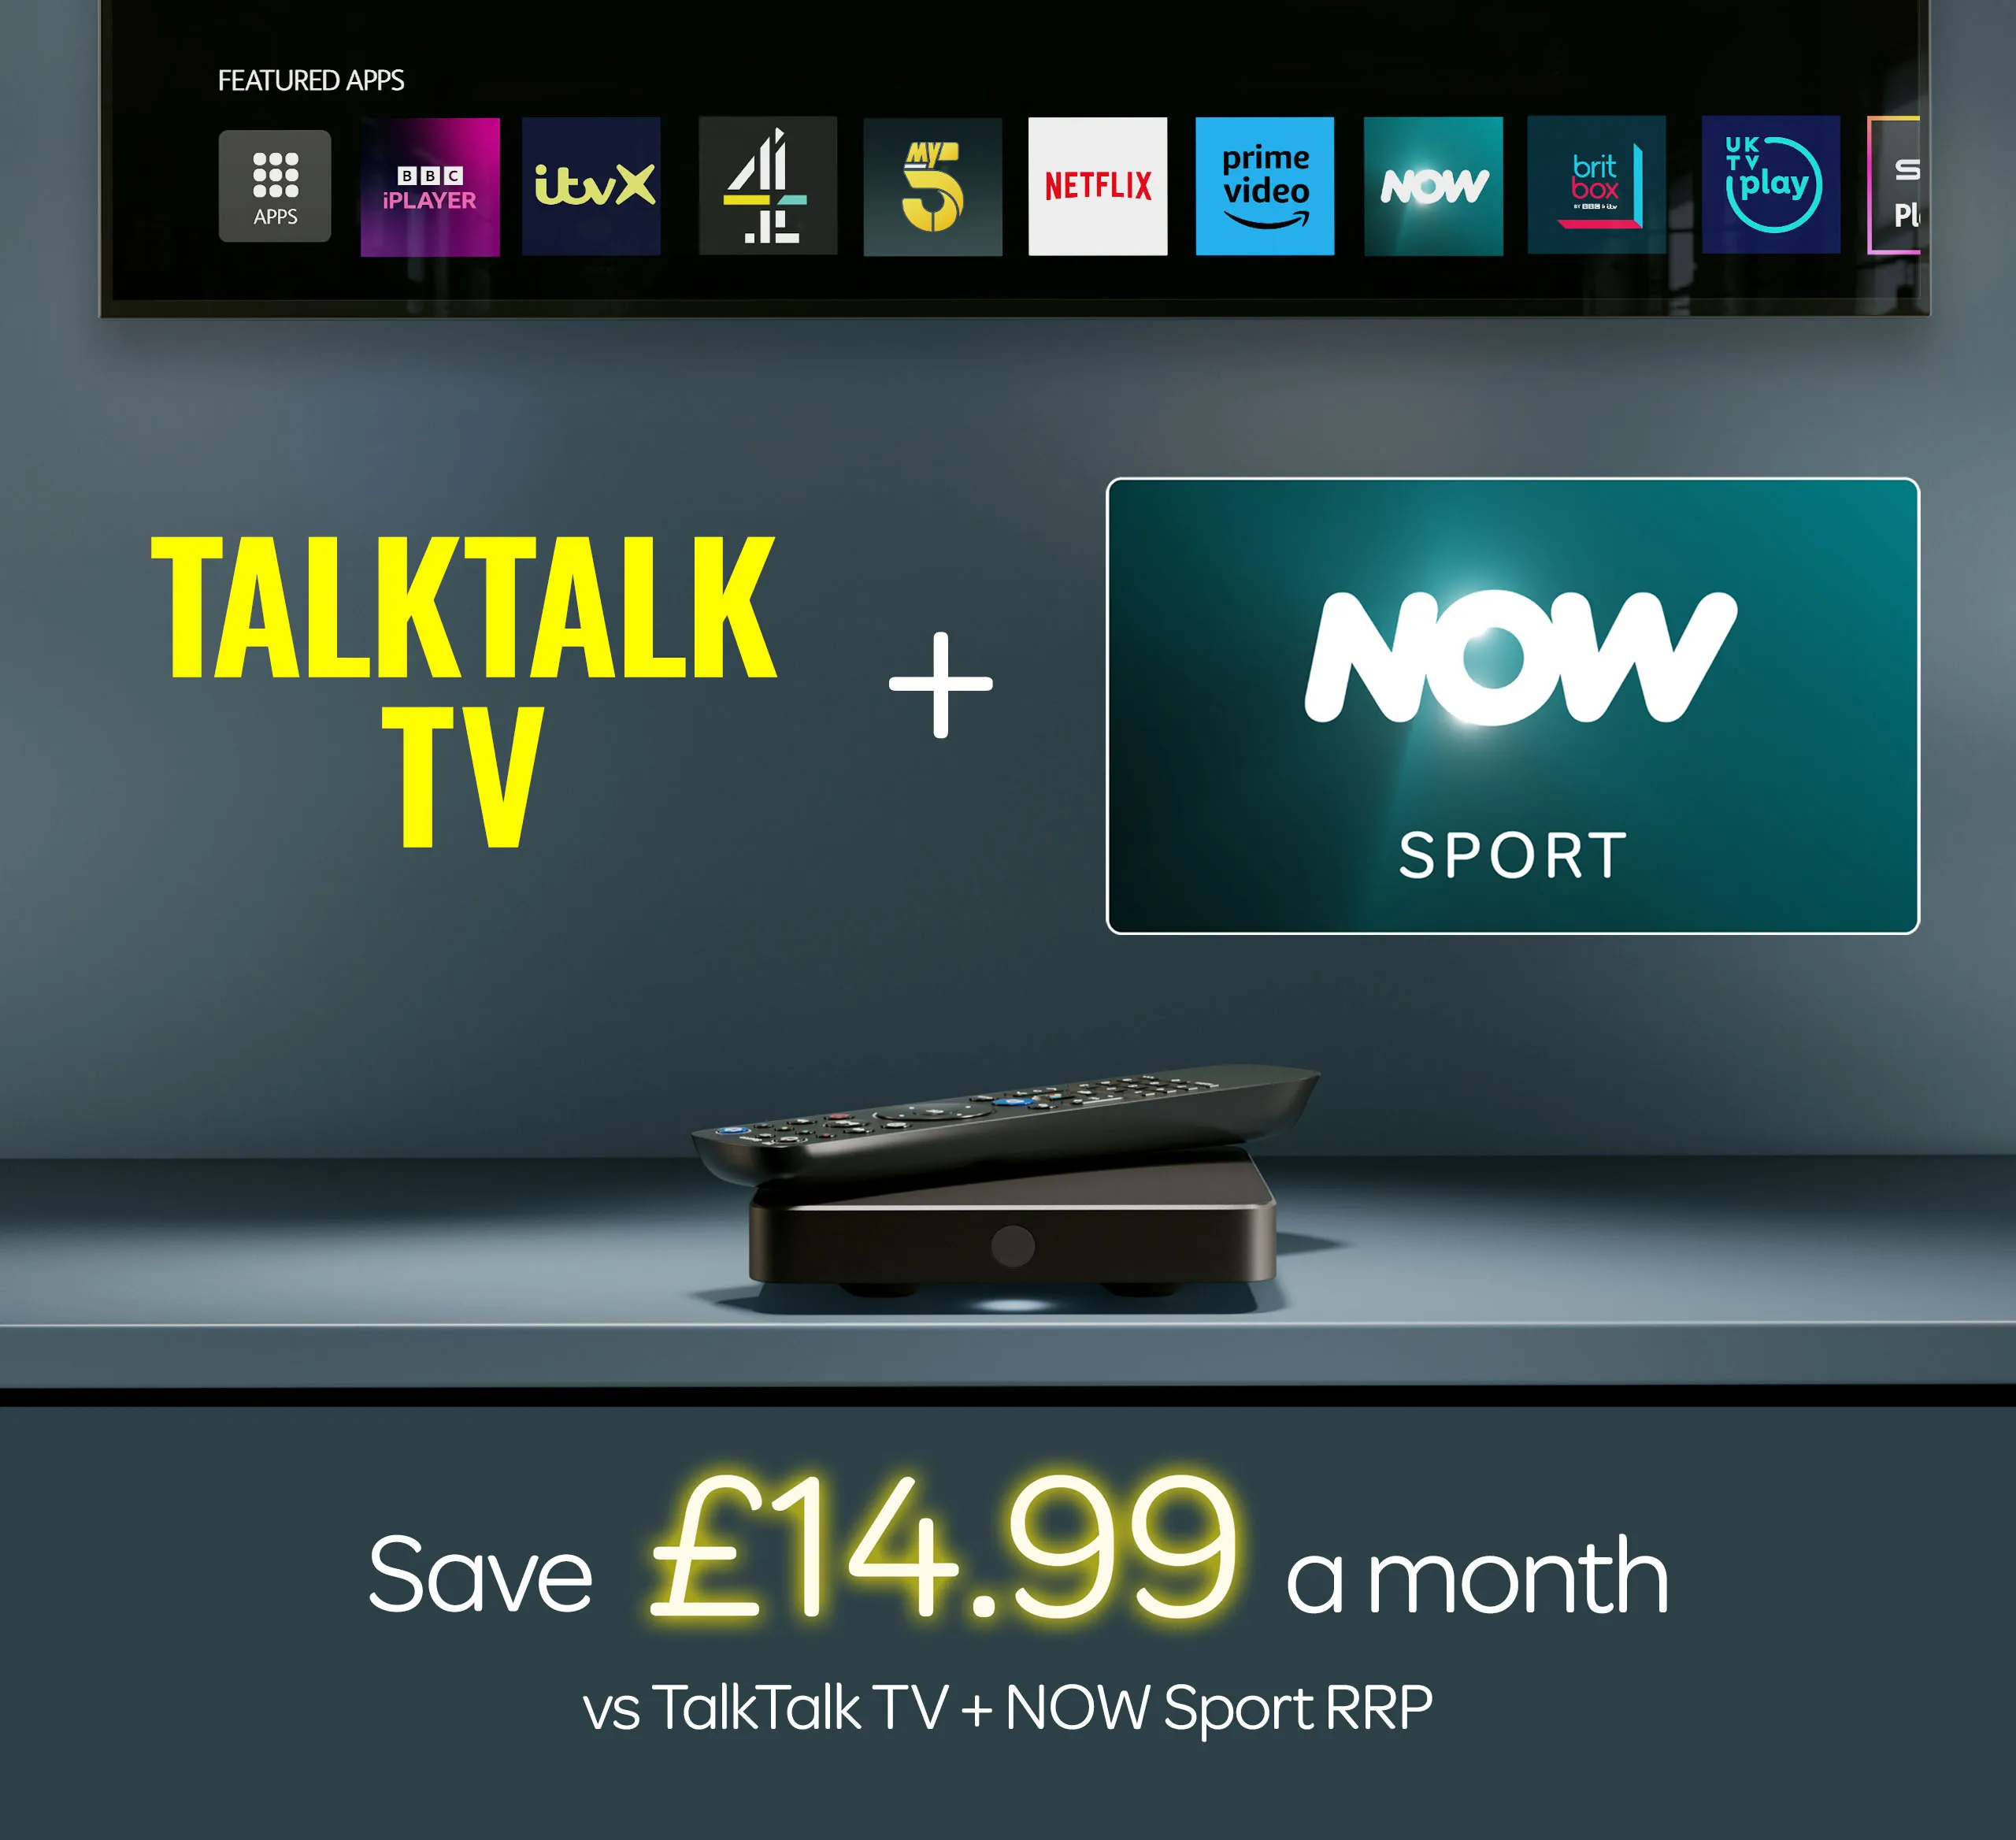 Save £14.99 a month vs. TalkTalk TV + NOW Sport RRP